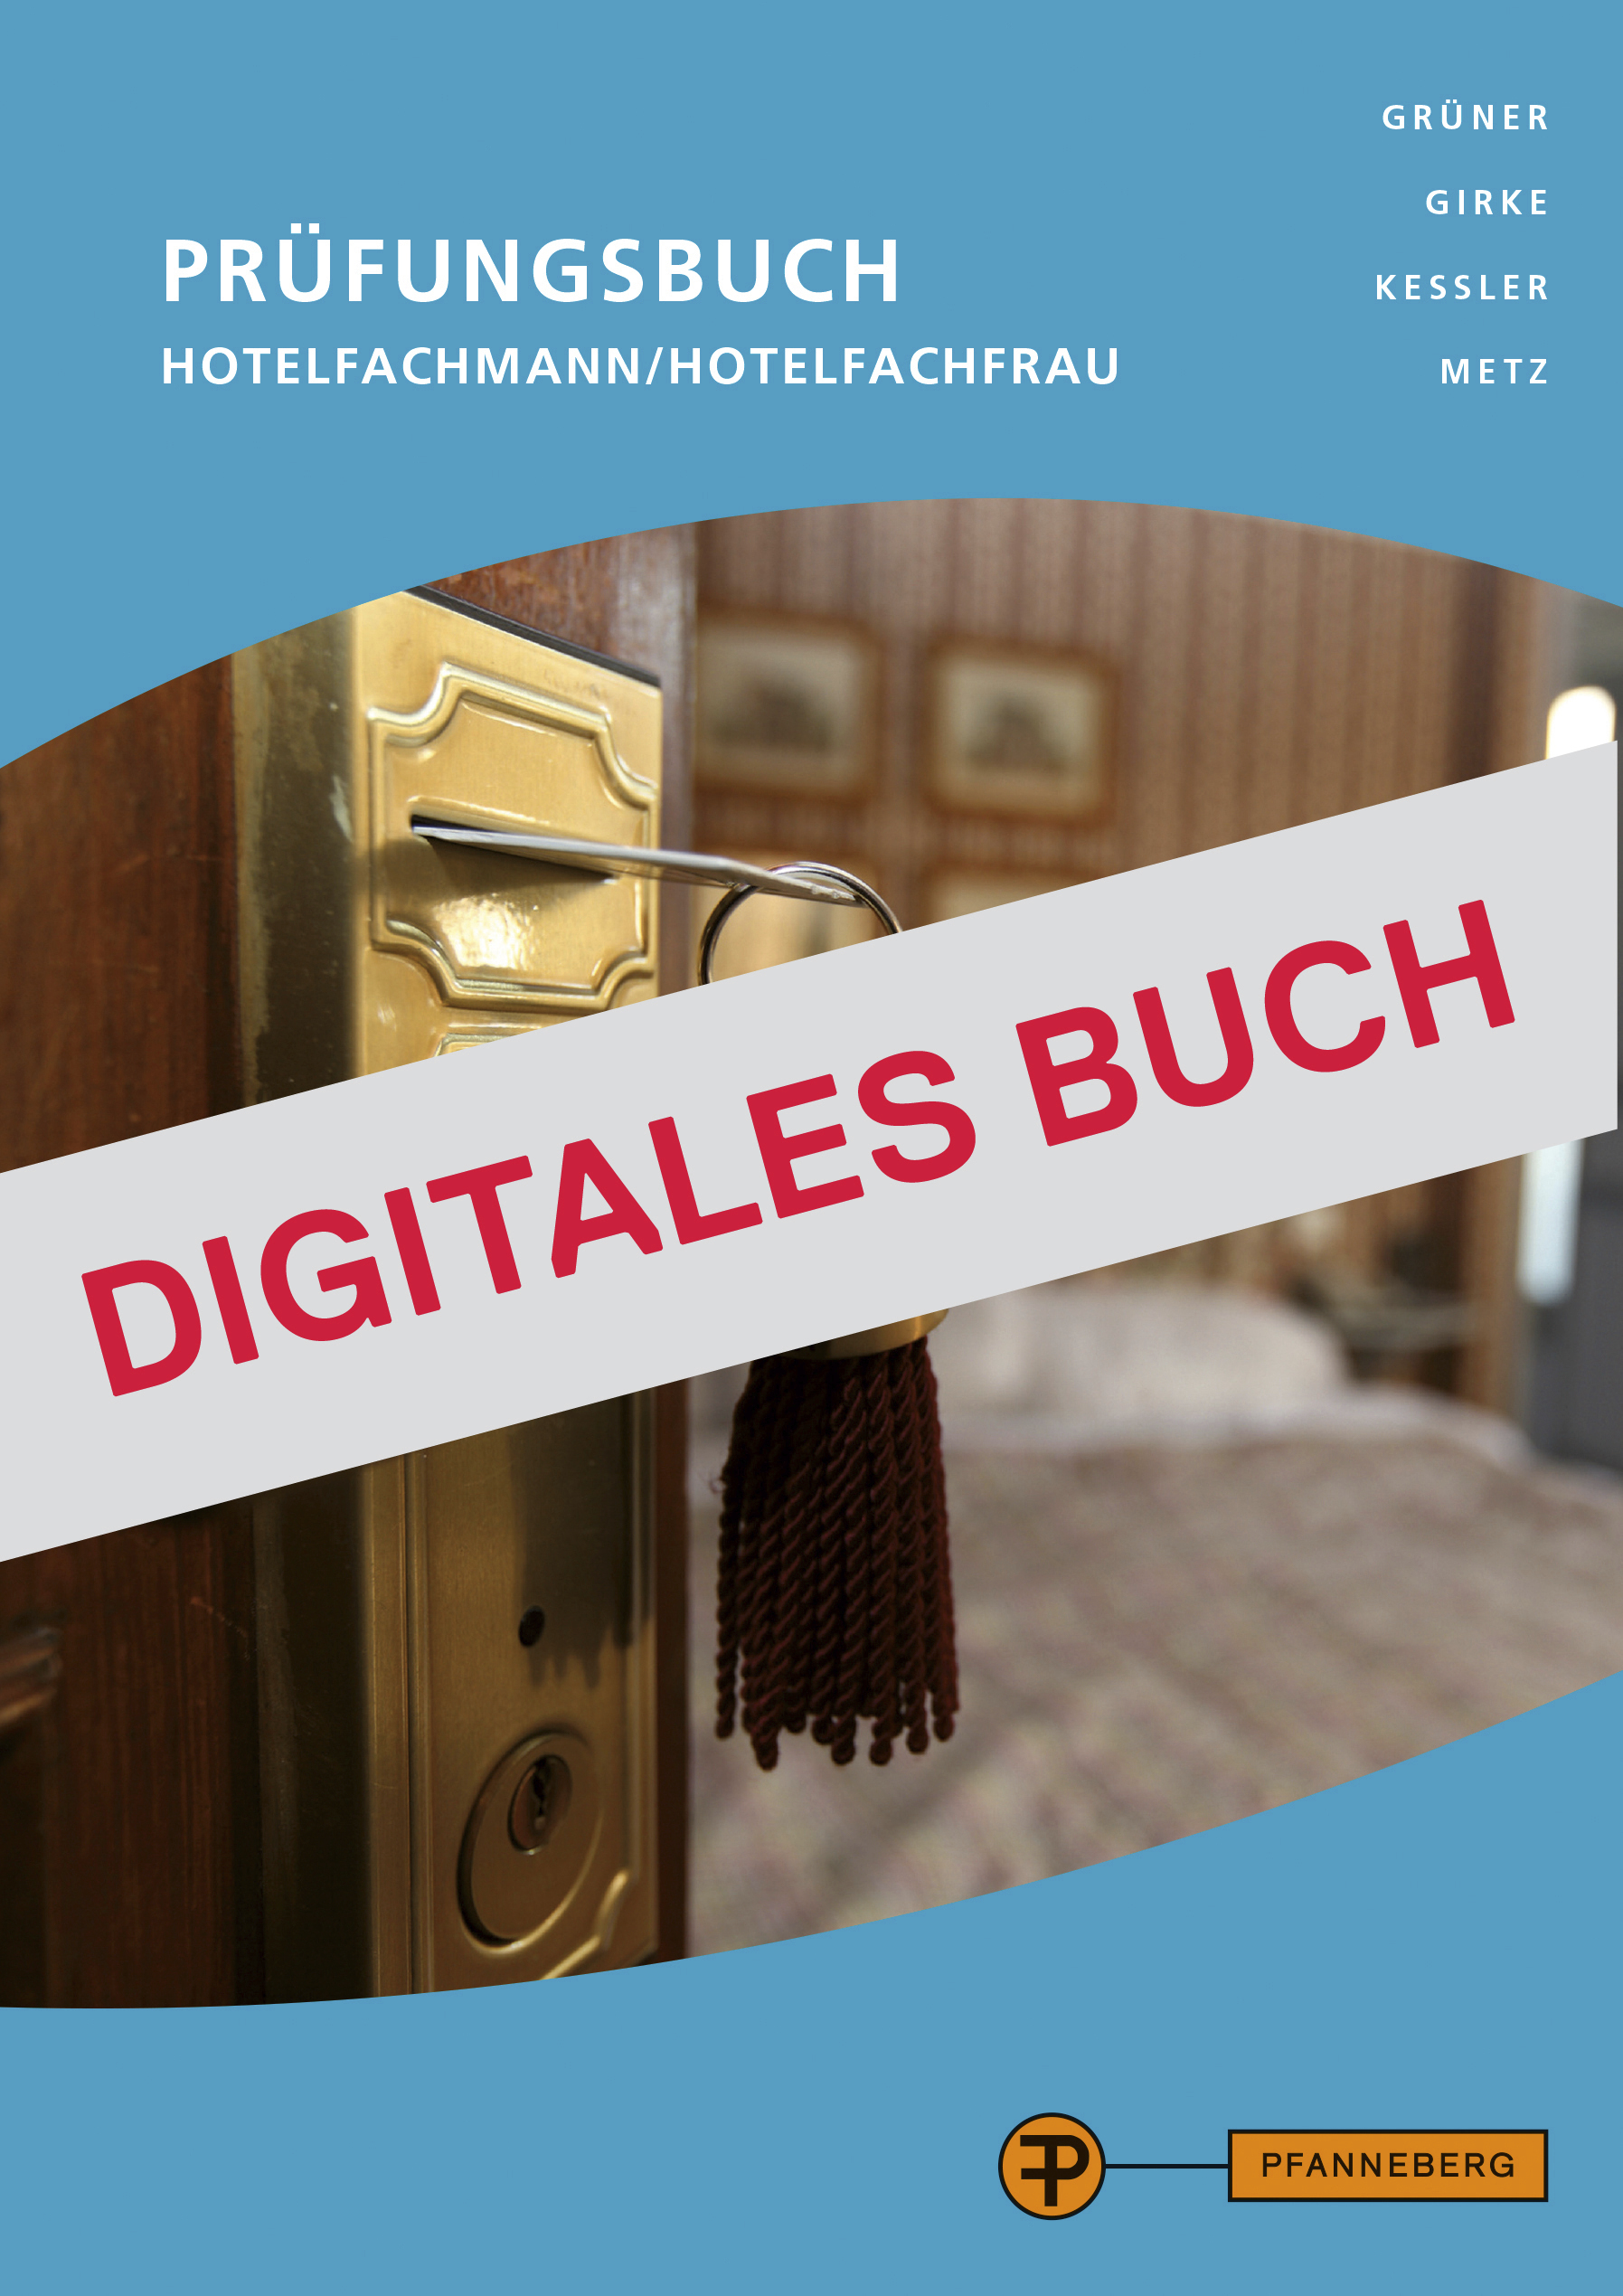 Prüfungsbuch Hotelfachmann/Hotelfachfrau - Digitales Buch